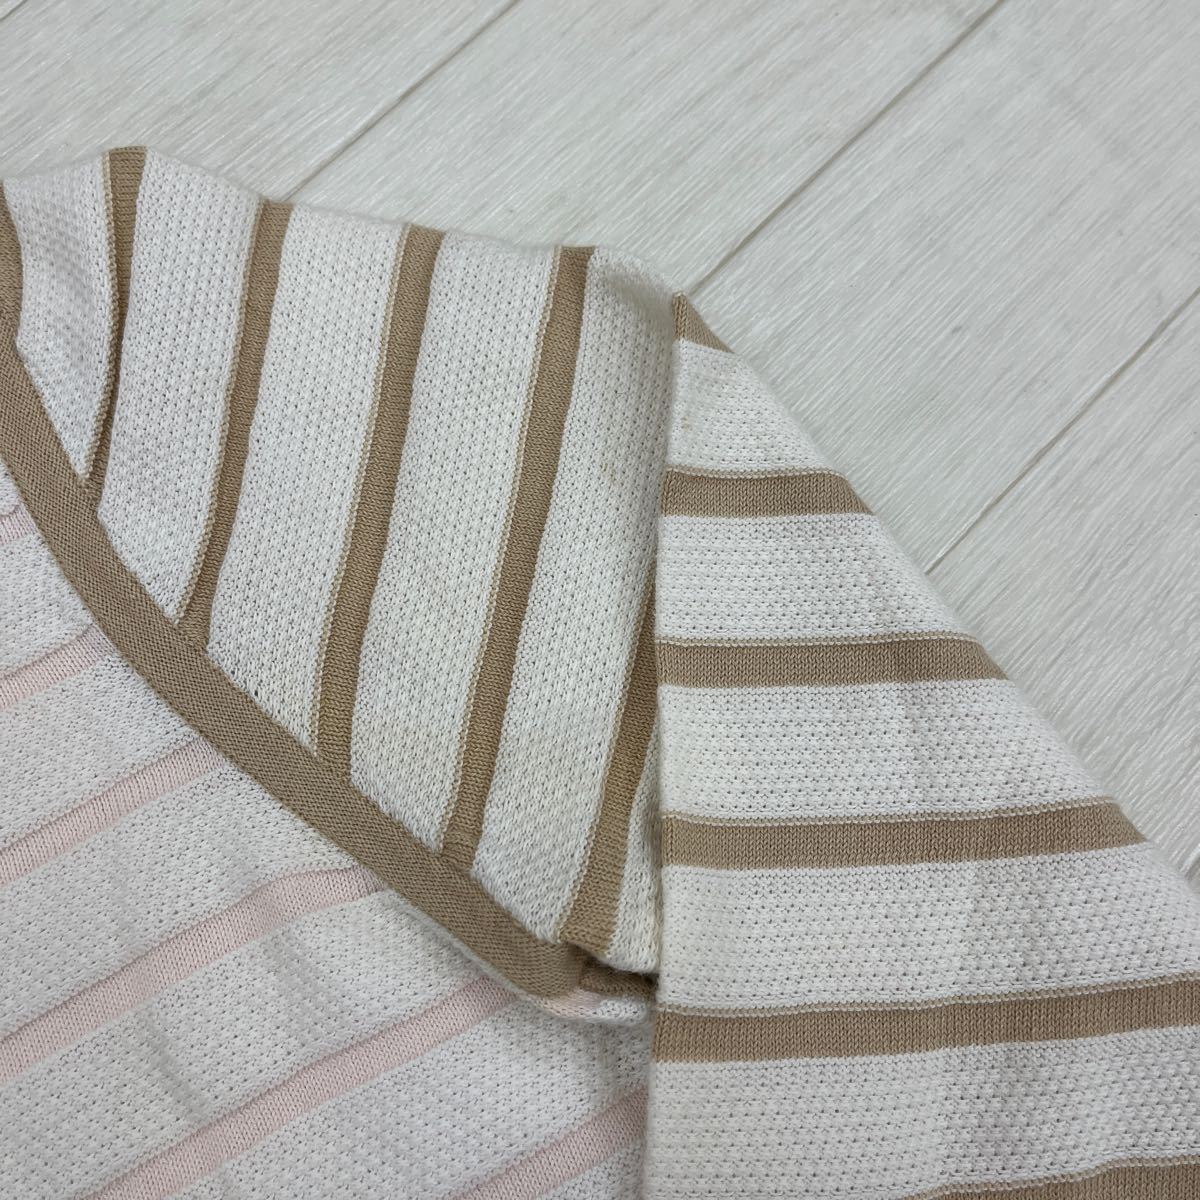 1257* Paule Ka paul (pole) ka tops knitted cardigan long sleeve border casual white Brown Pink Lady -s